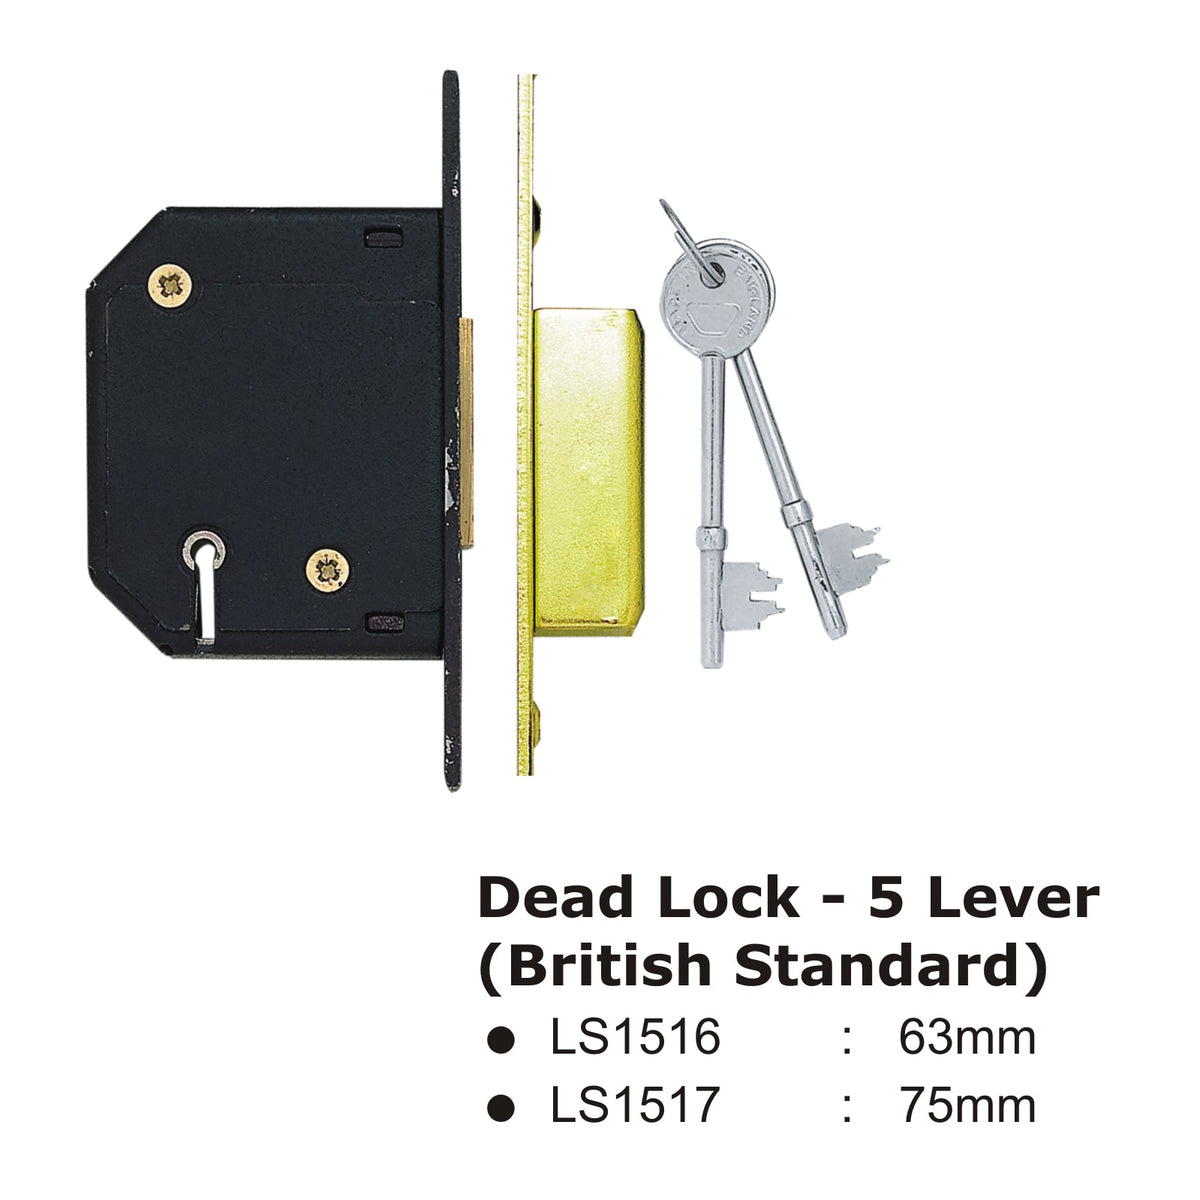 Dead Lock - 5 Lever (British Standard) -63mm